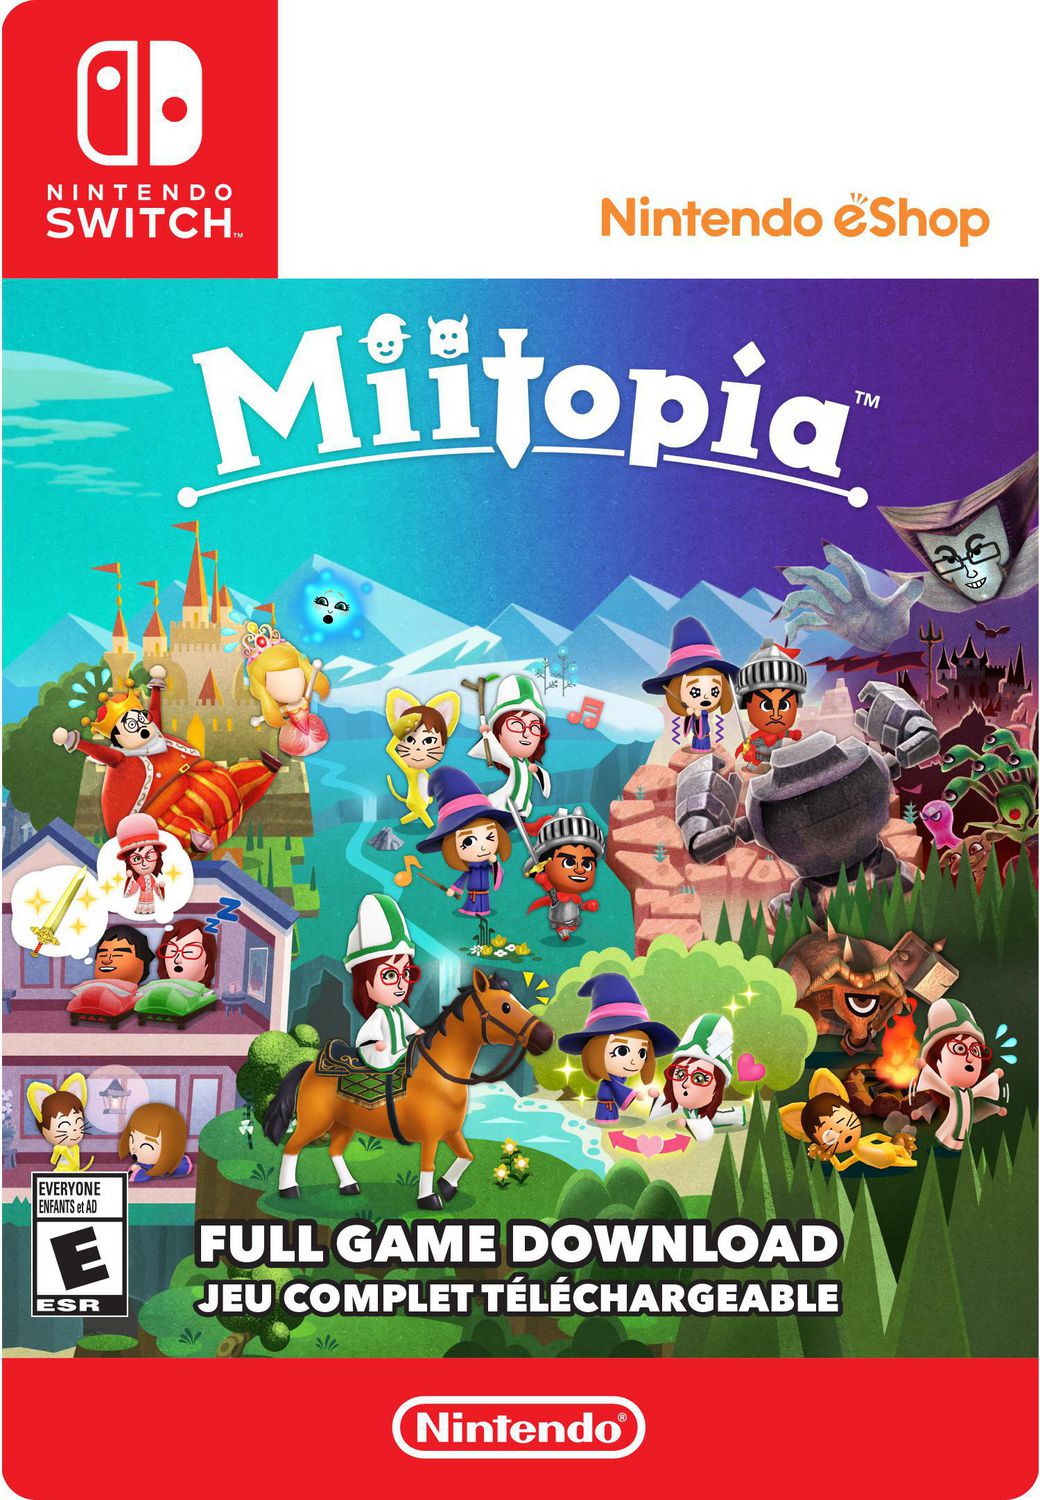 miitopia download code for free no download